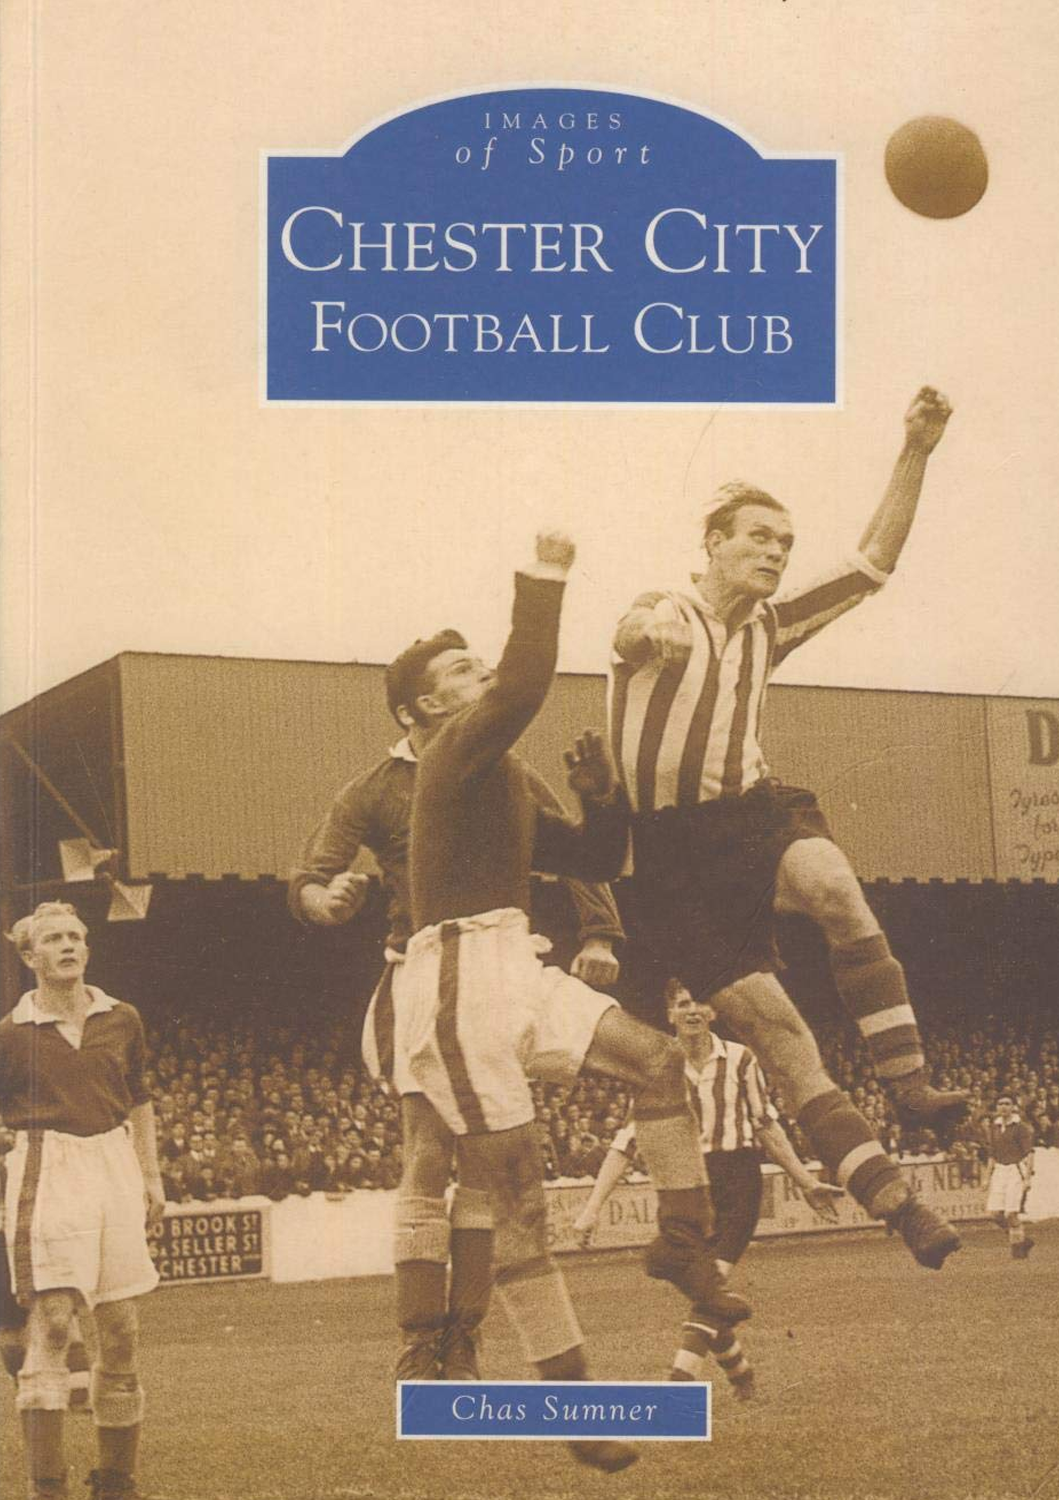 Chester City Football Club